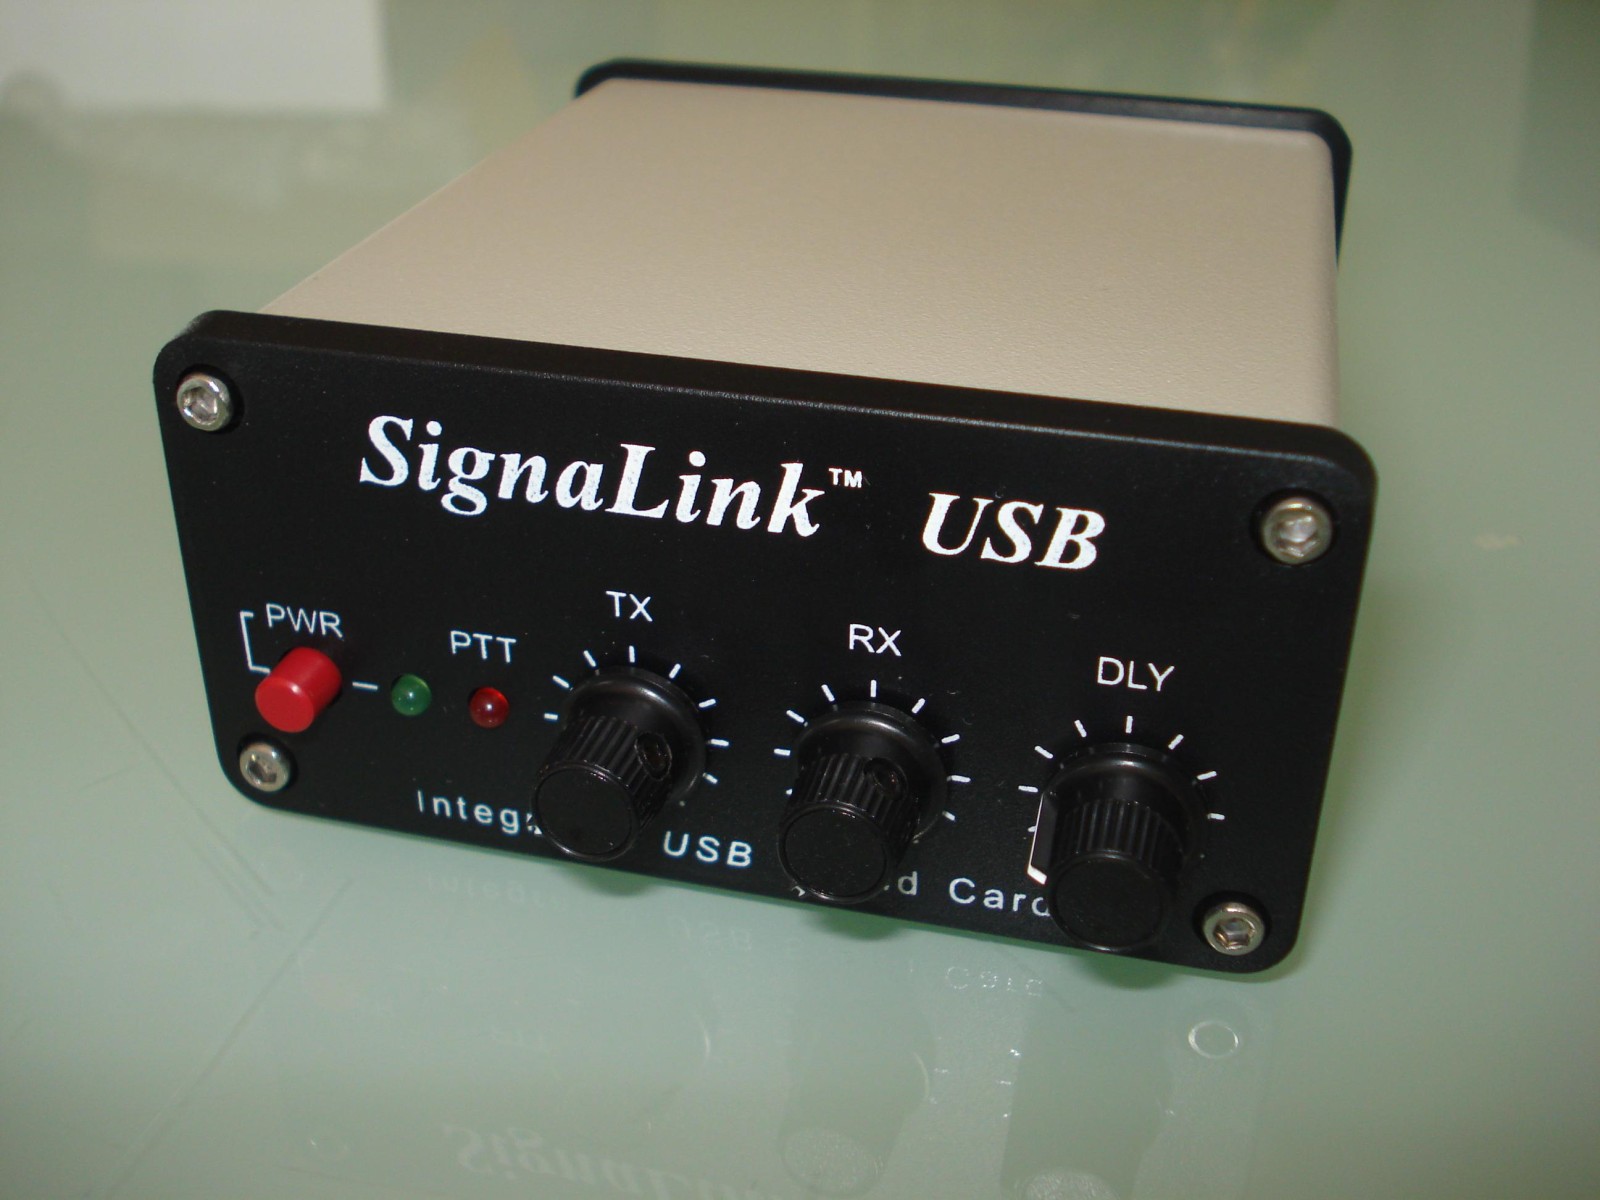 SignaLink USB front